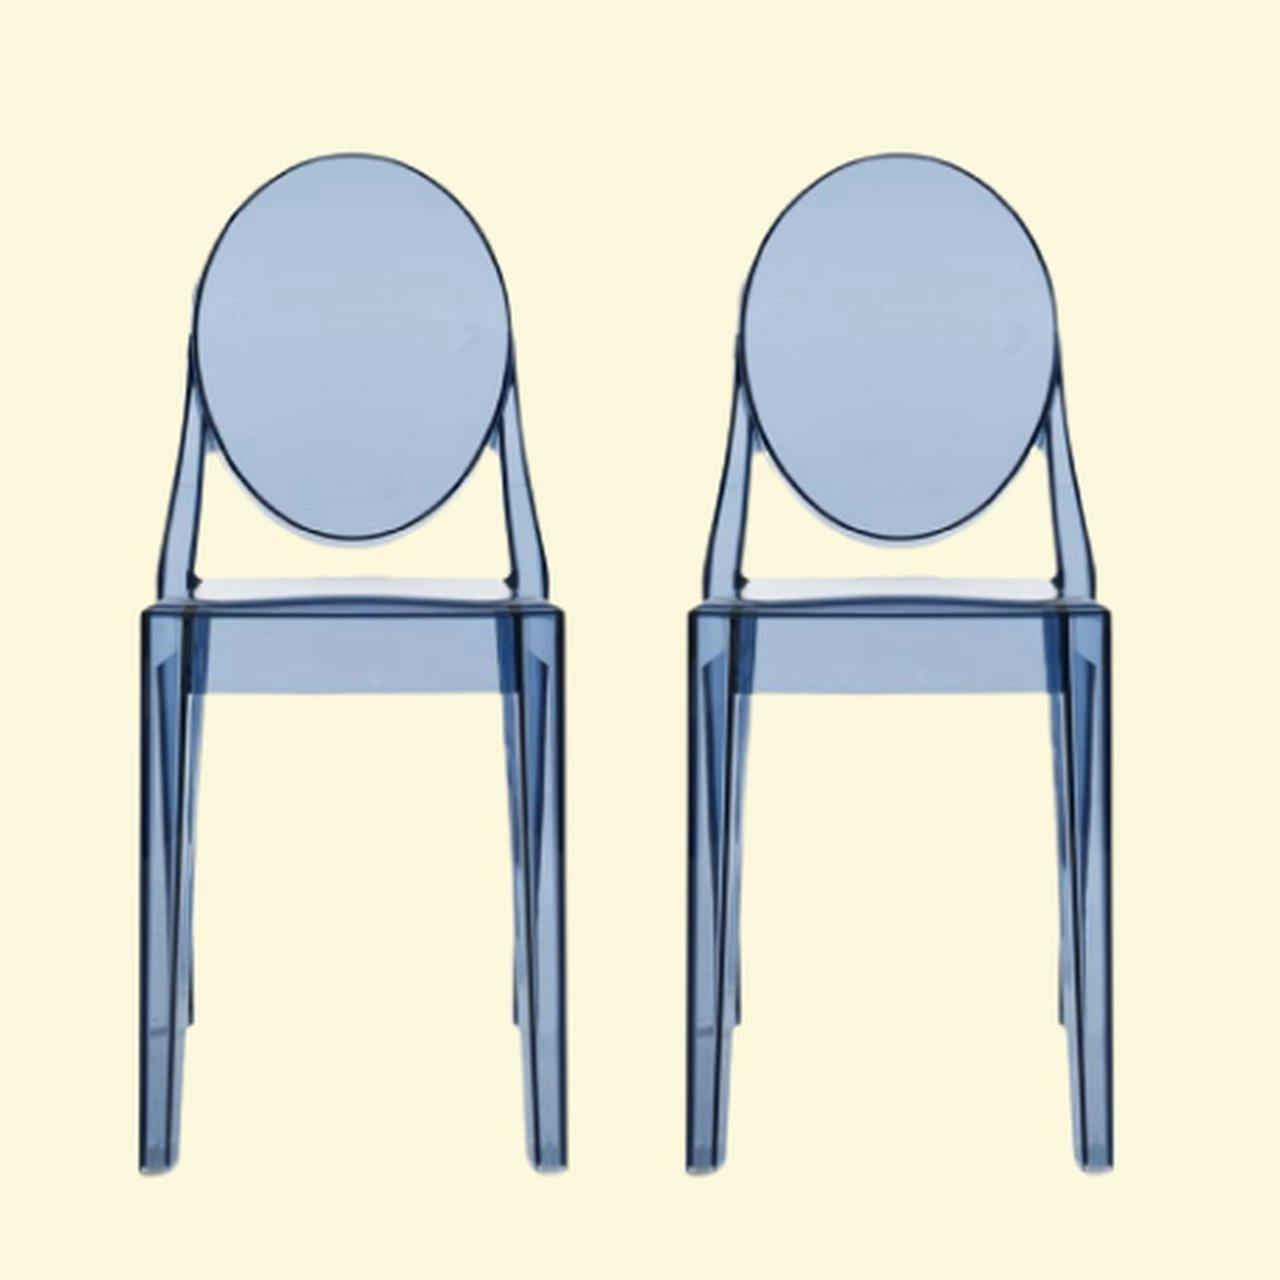 Fendi Casa Dining chairs